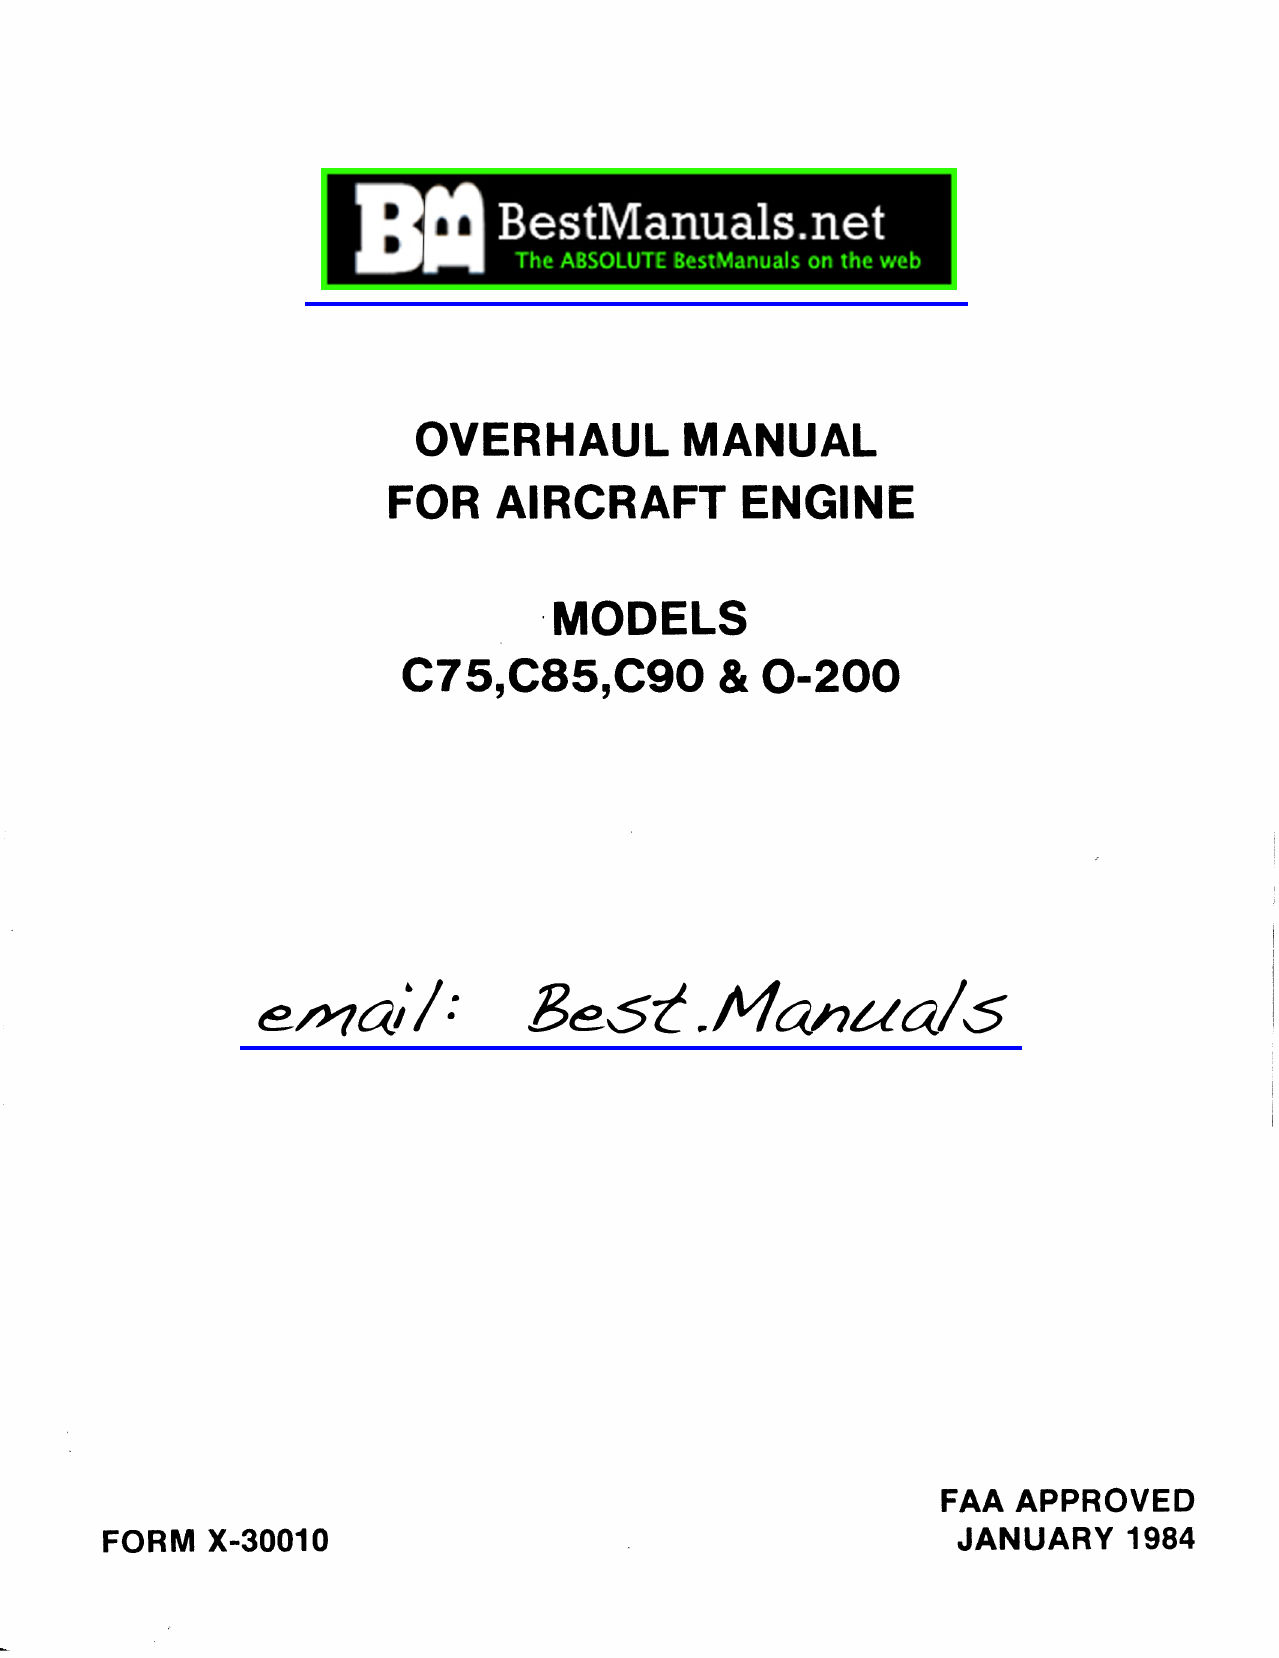 Continental C75, C85, C90, O-200 repair overhaul aircraft engine manual Preview image 6